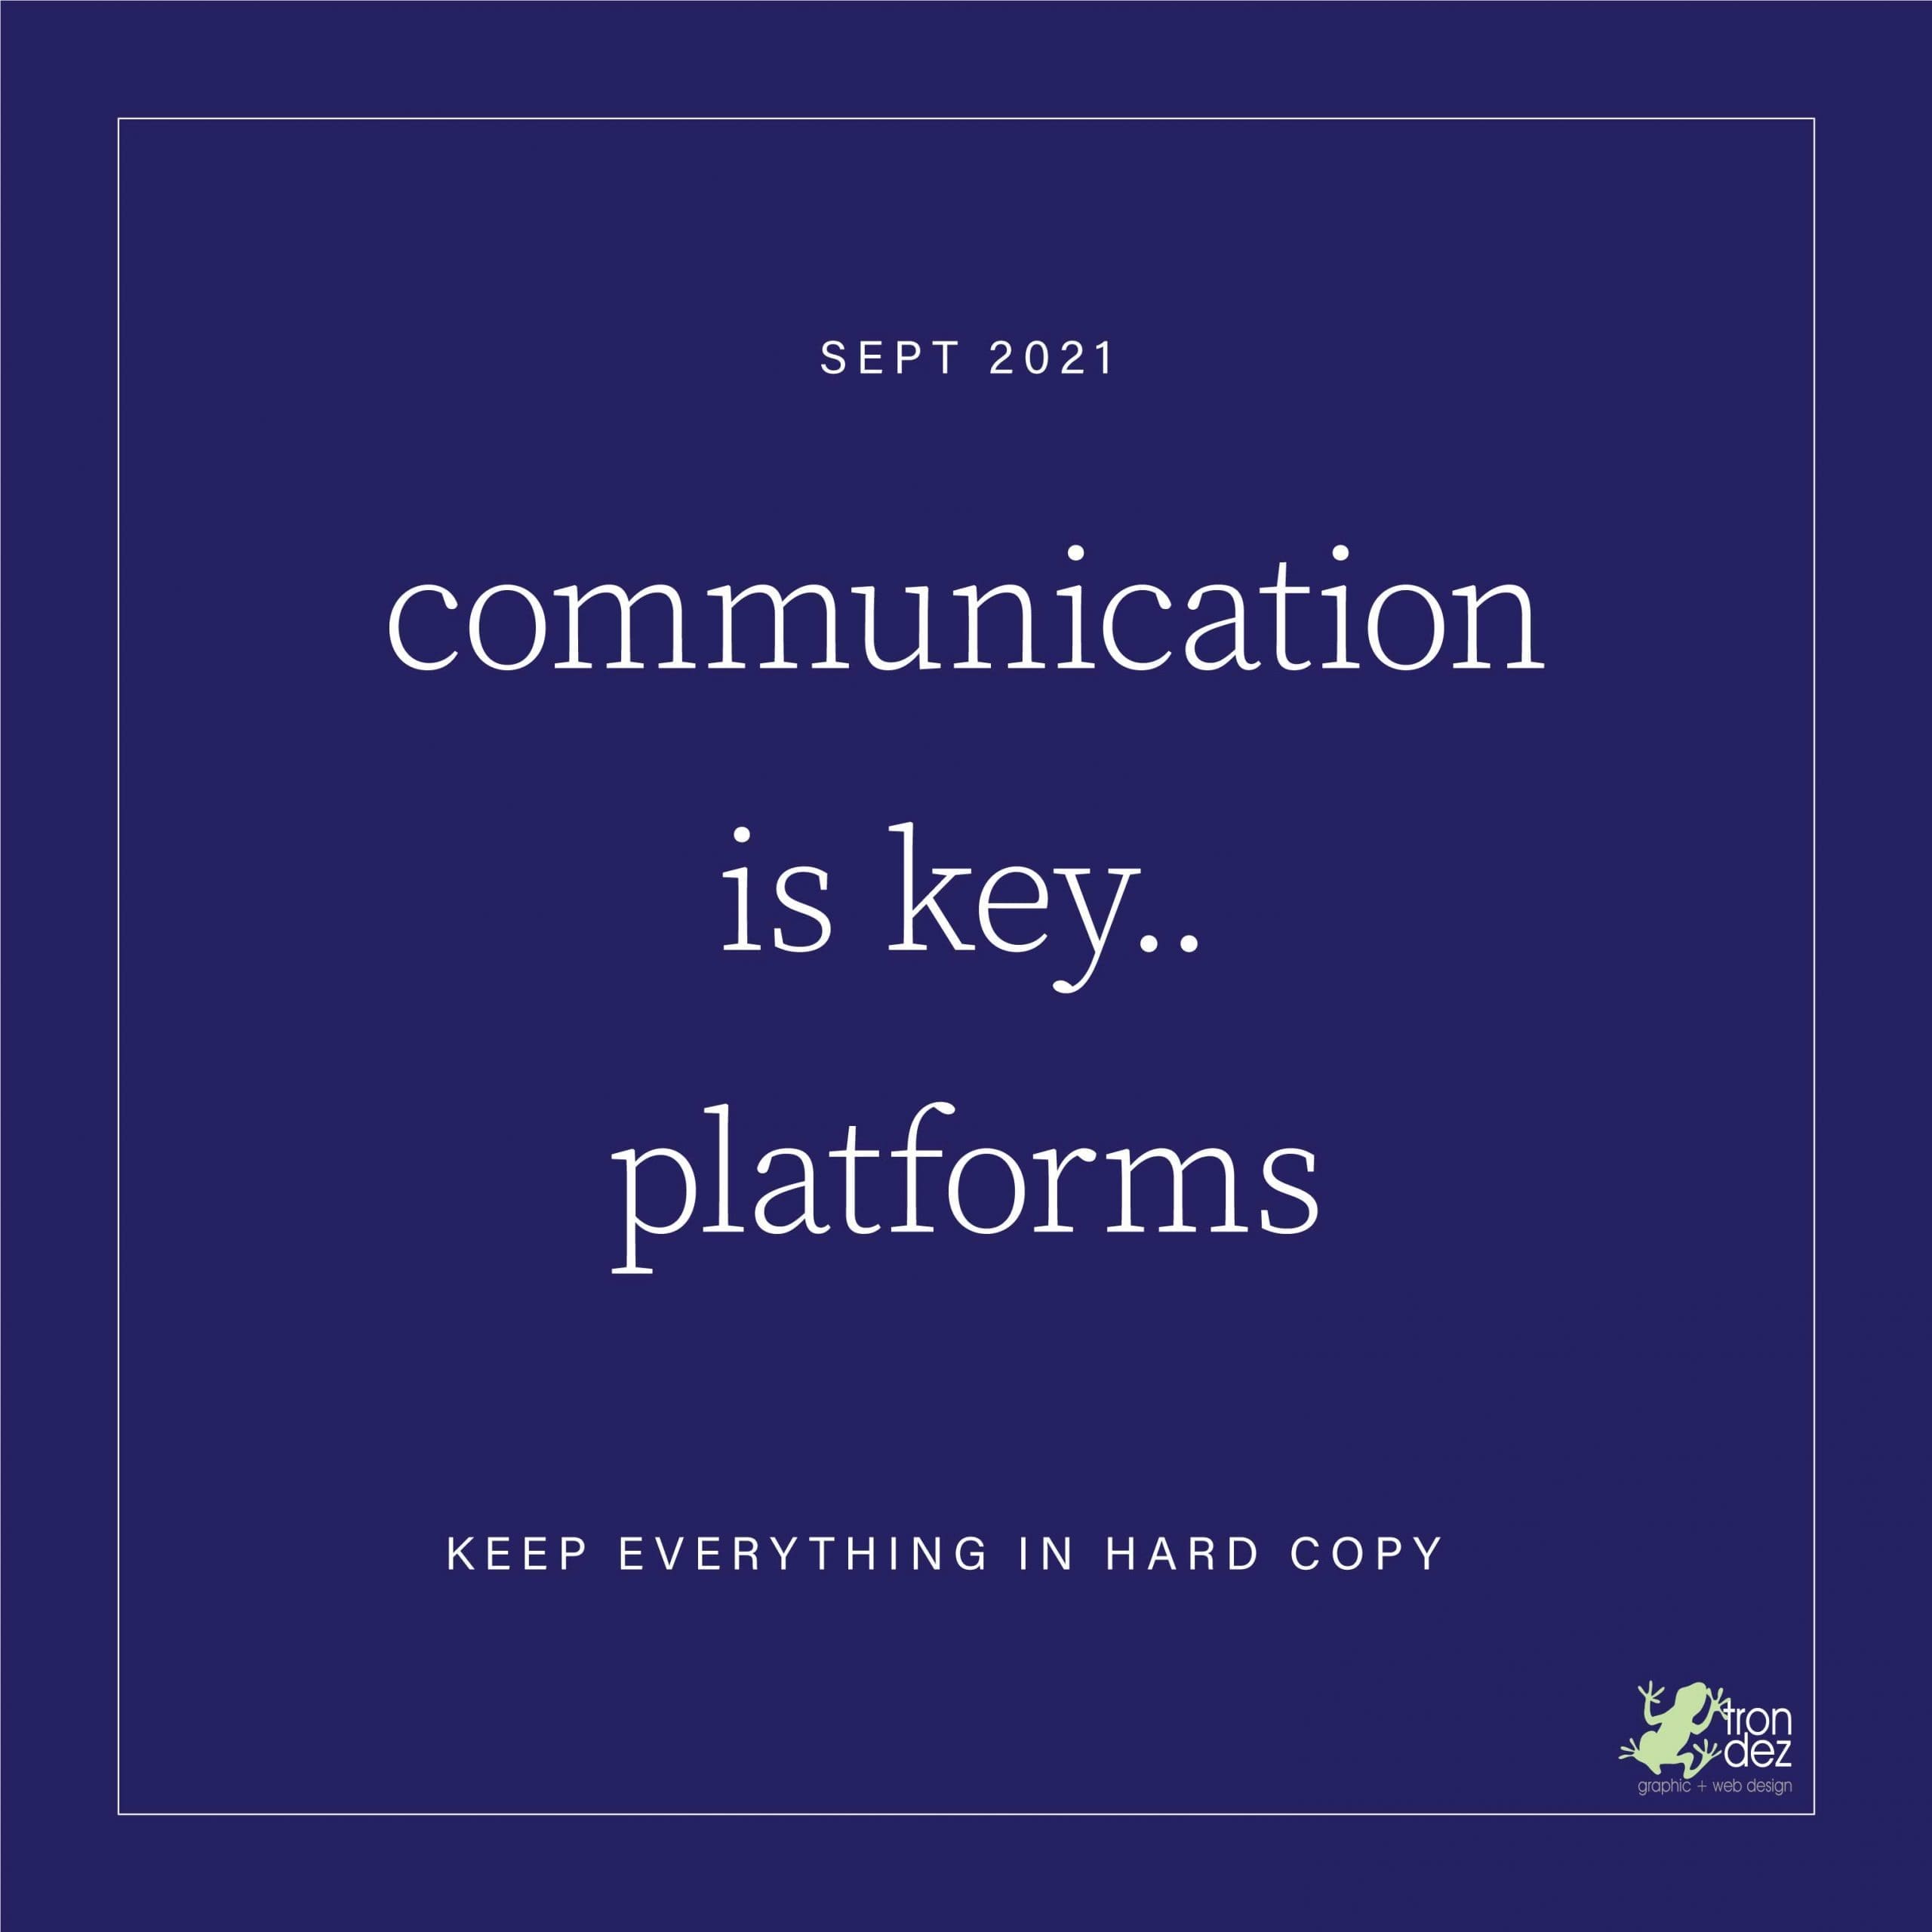 Communication is key